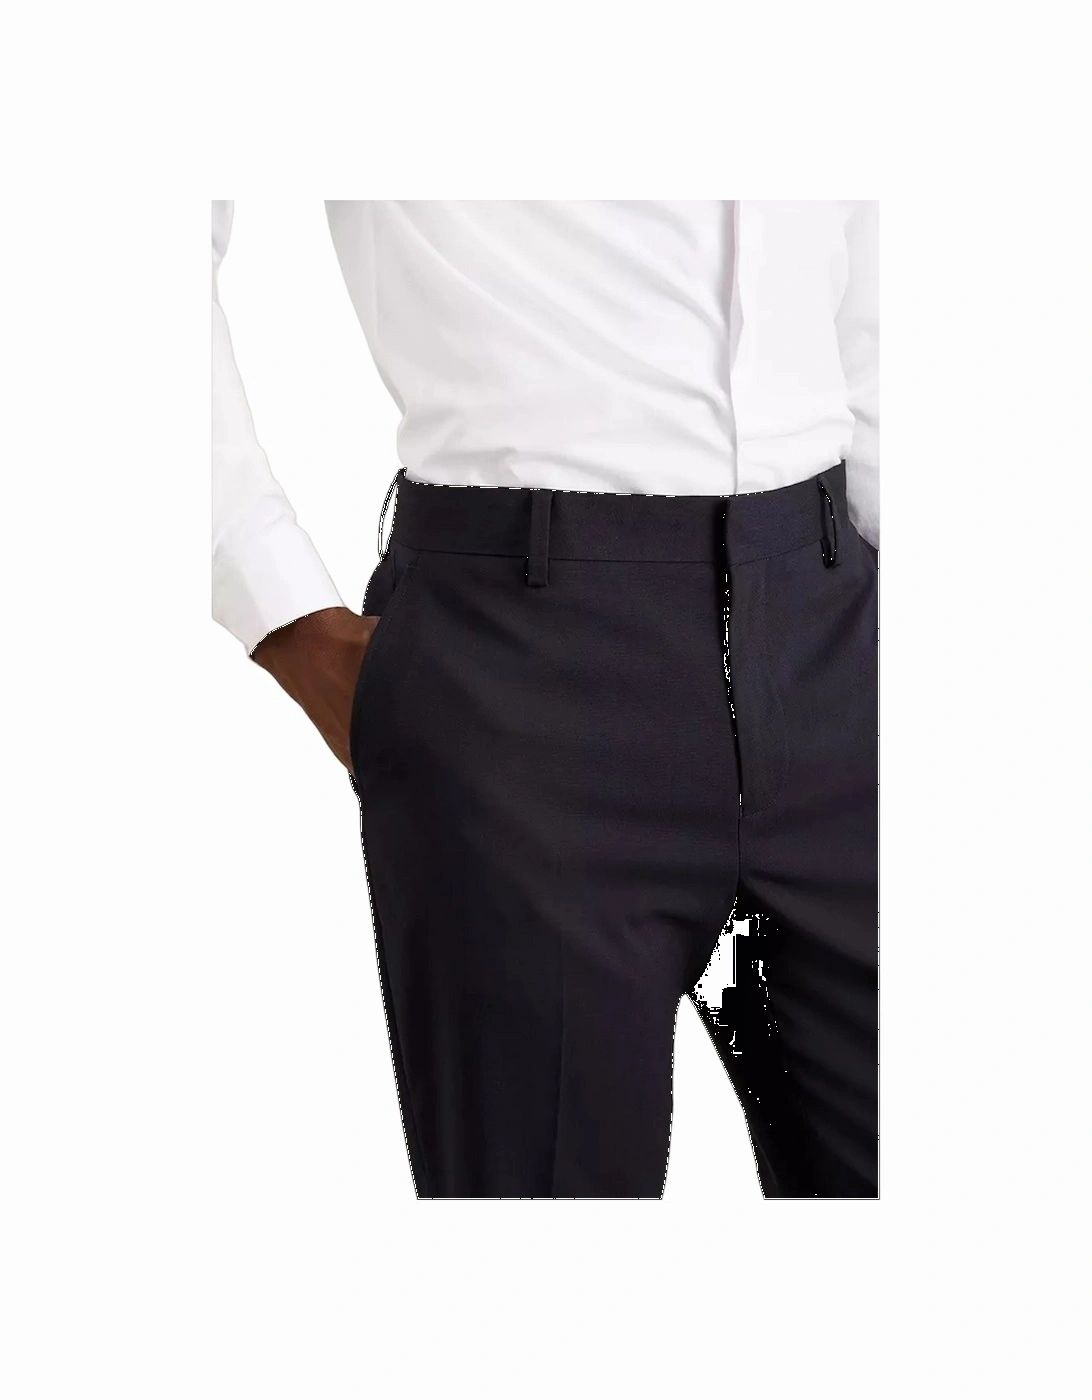 Mens Essential Plus Tailored Suit Trousers